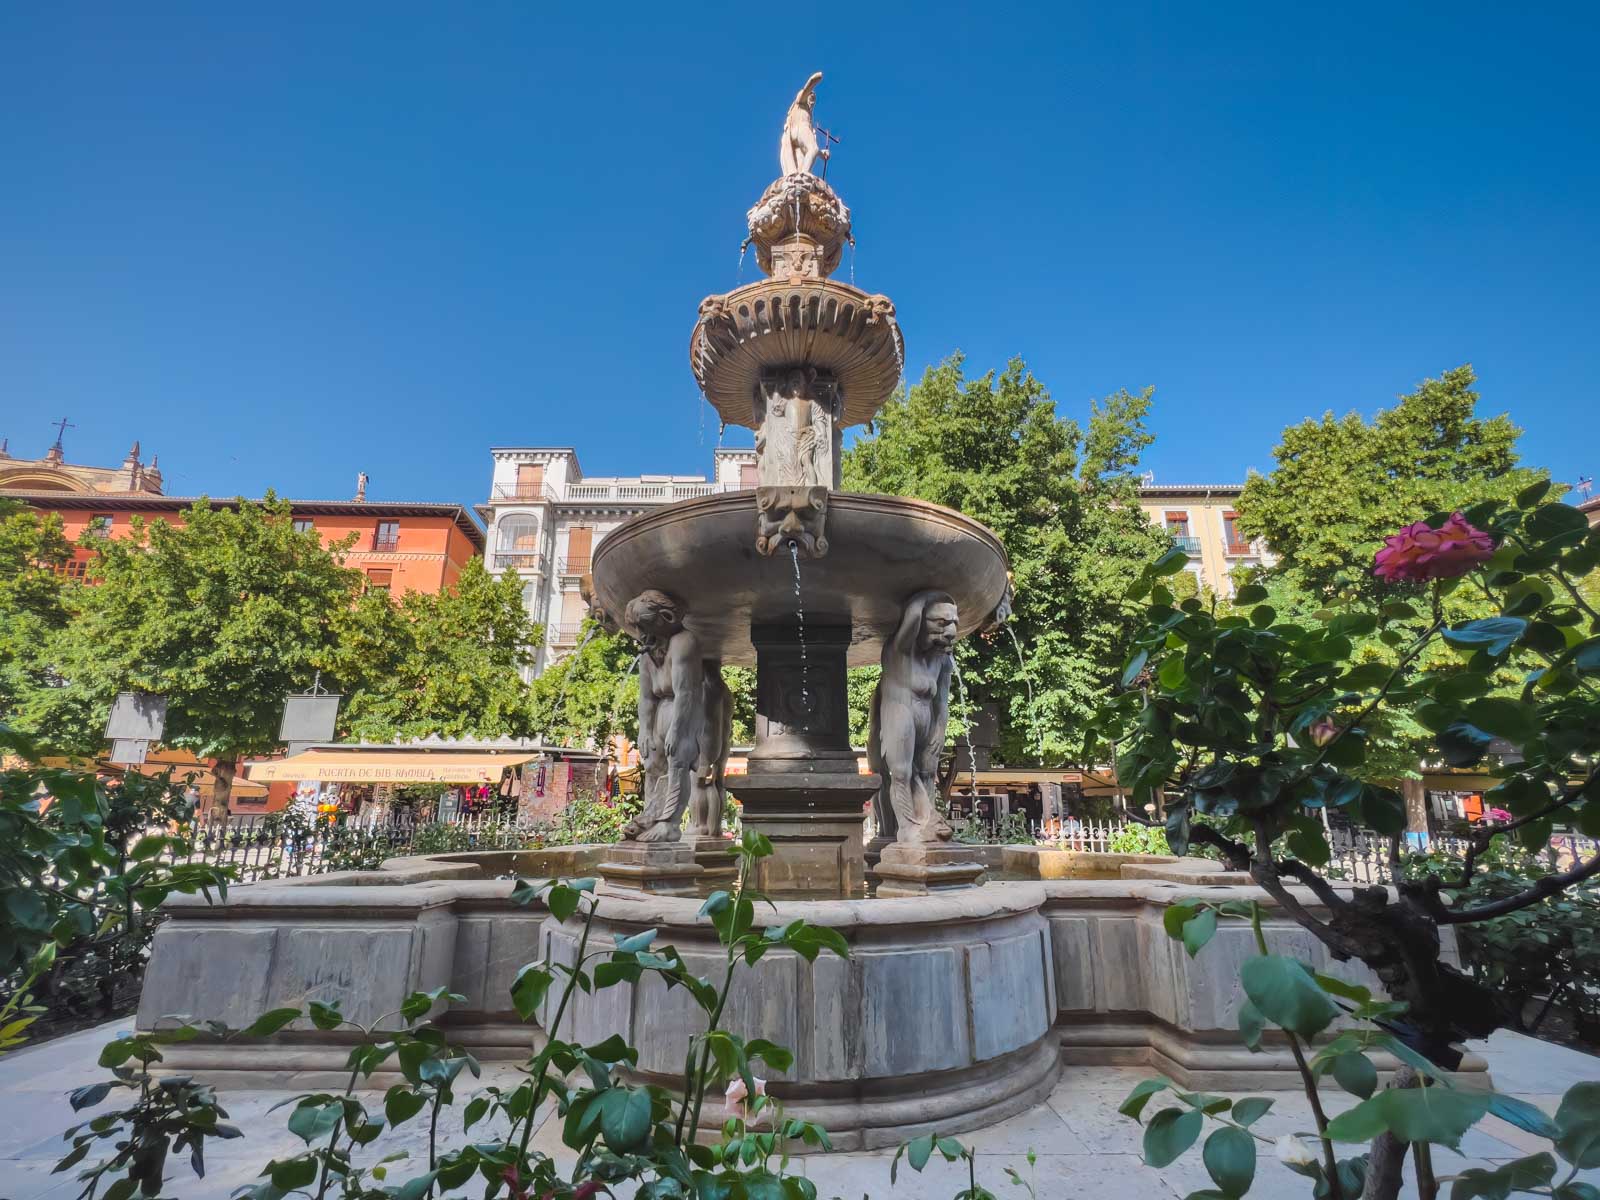 plaza bib Rambla fountain